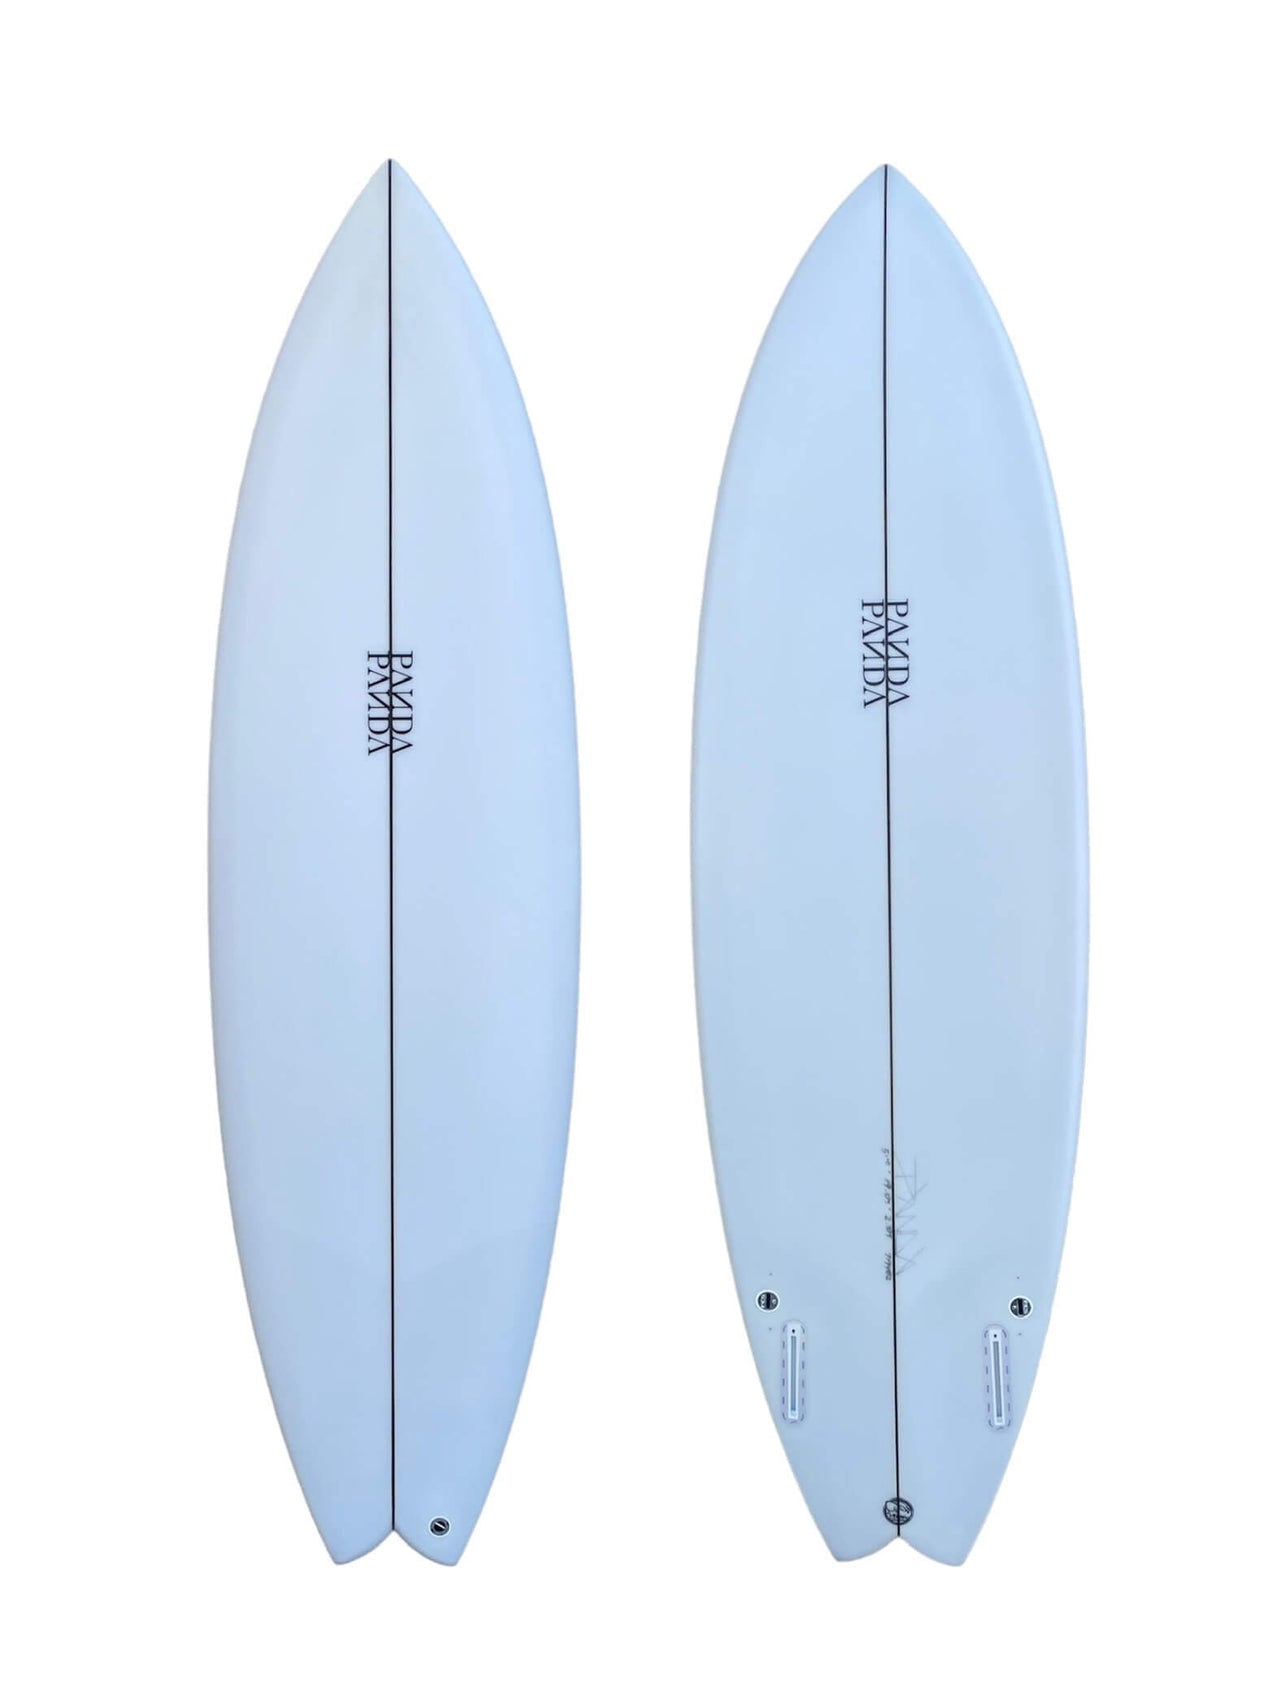 Panda surfboards Shiitake HP stock